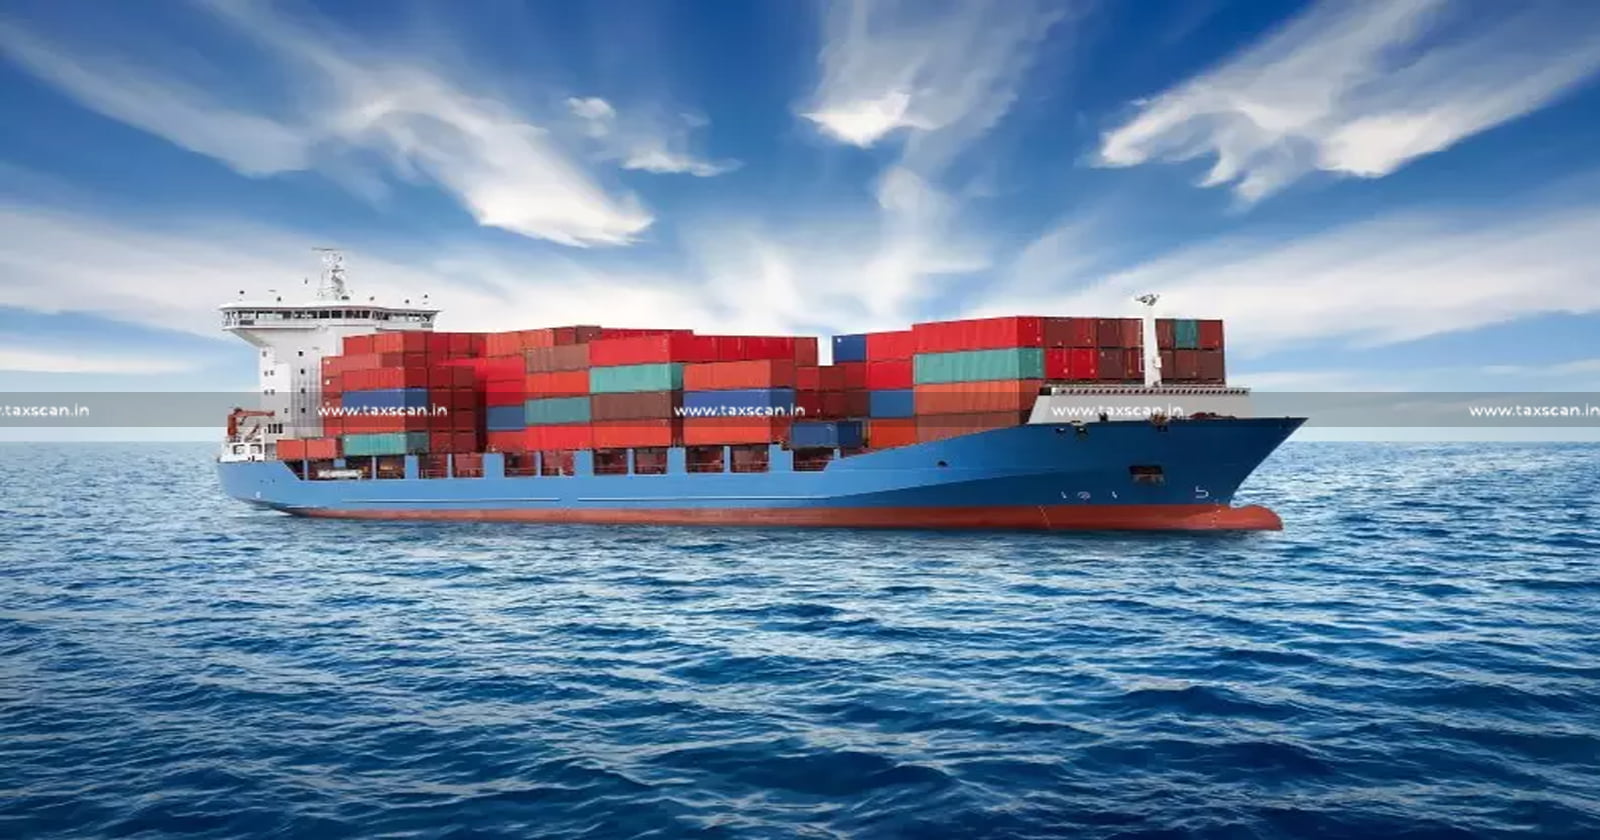 Ocean Freight - Service Tax - RCM - CIF Imports - Supreme Court - Service Tax under RCM - taxscan